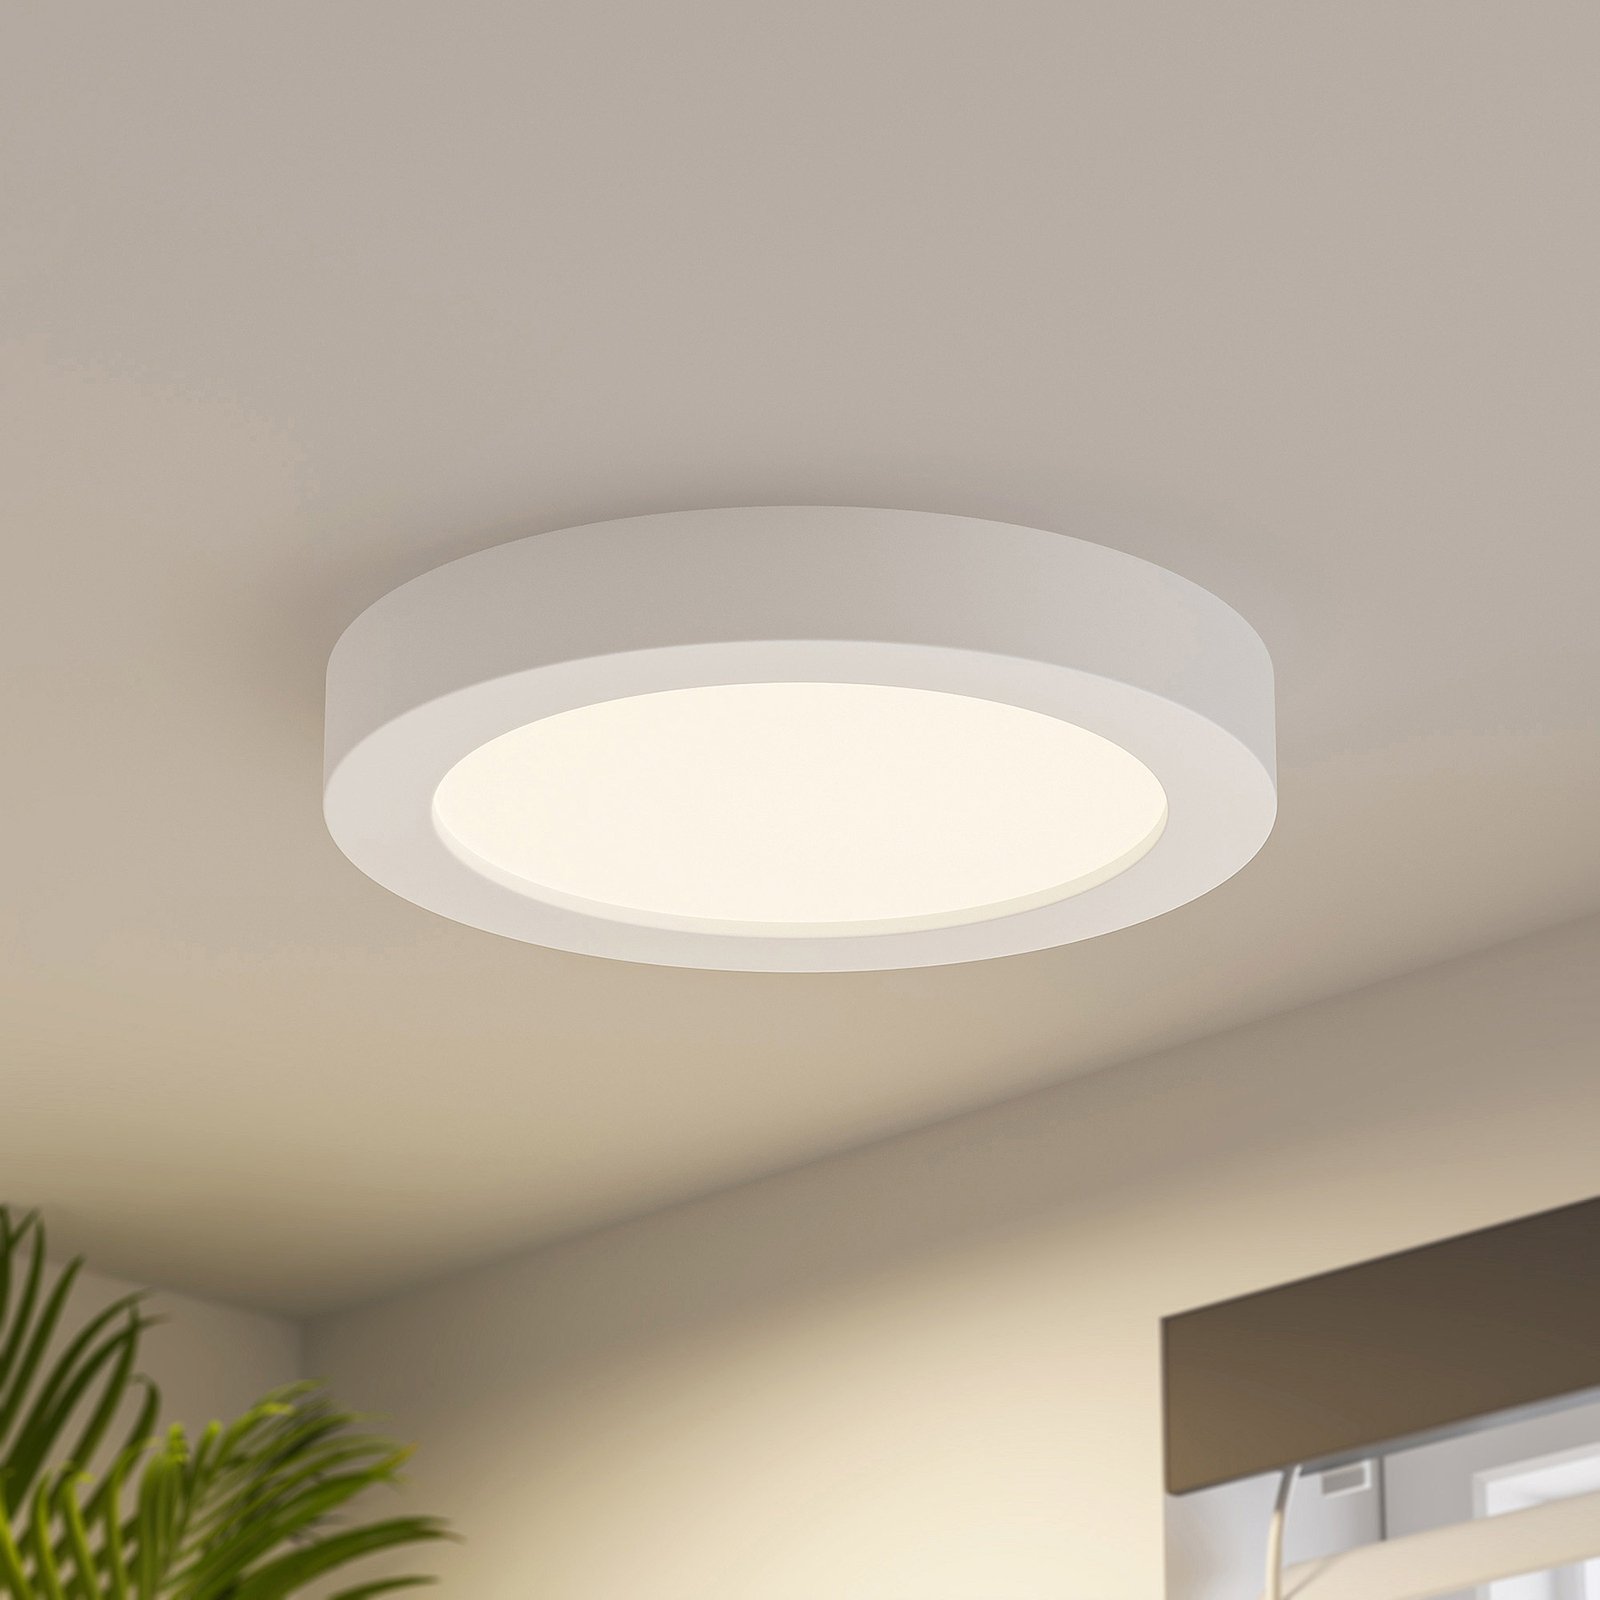 Prios Edwina LED ceiling light, white, 24.5 cm